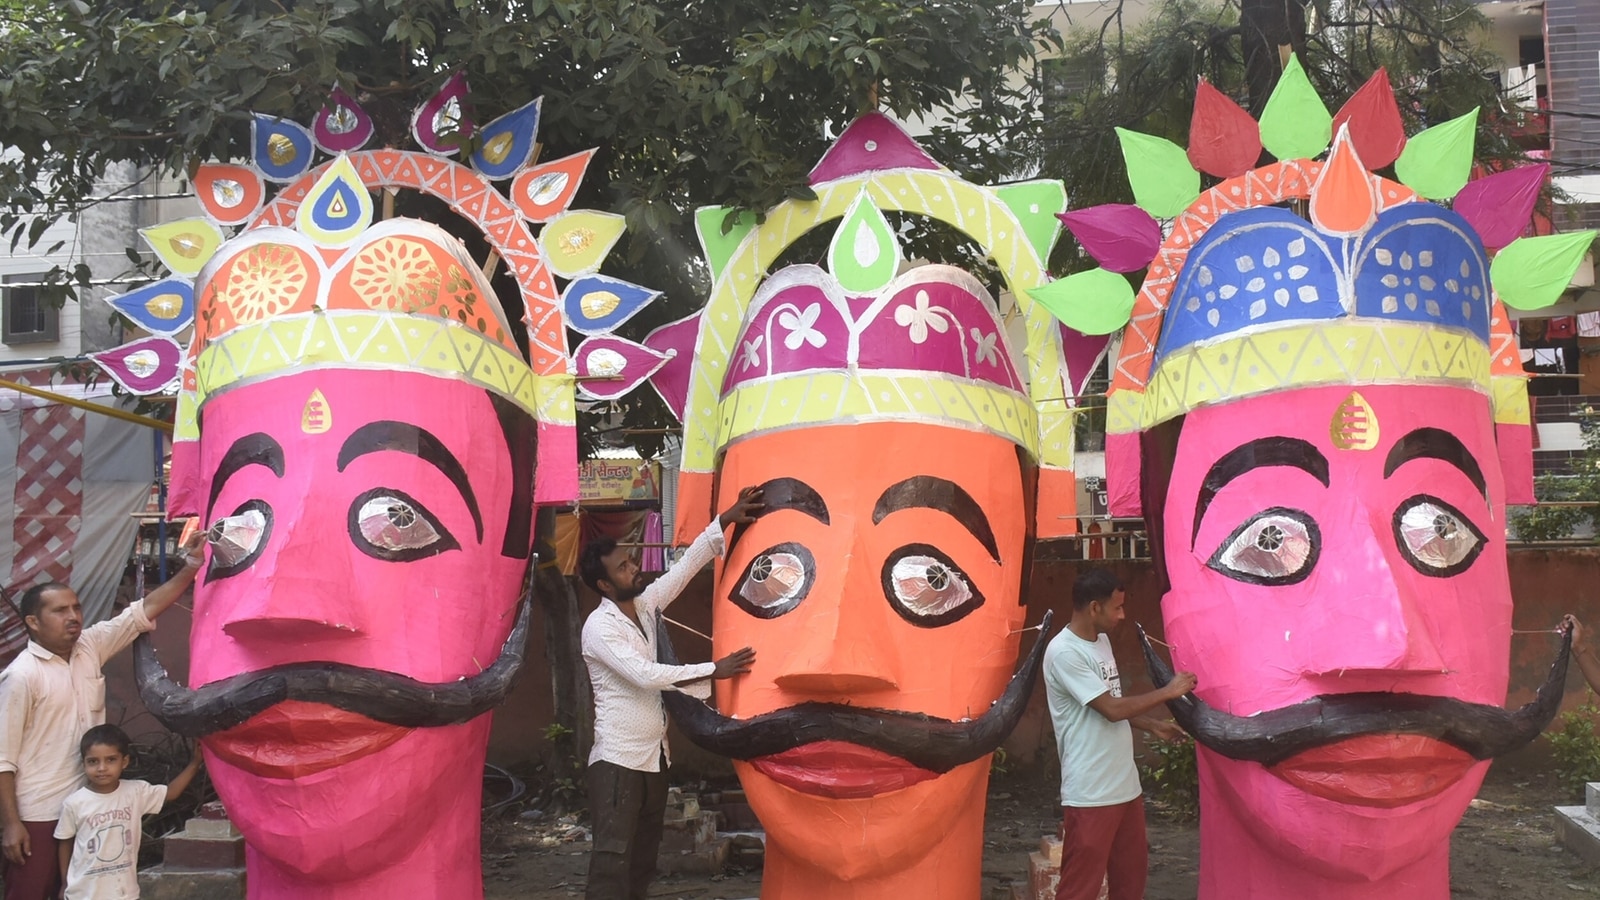 Delhi Ravan effigy makers get special orders from Australia on ...